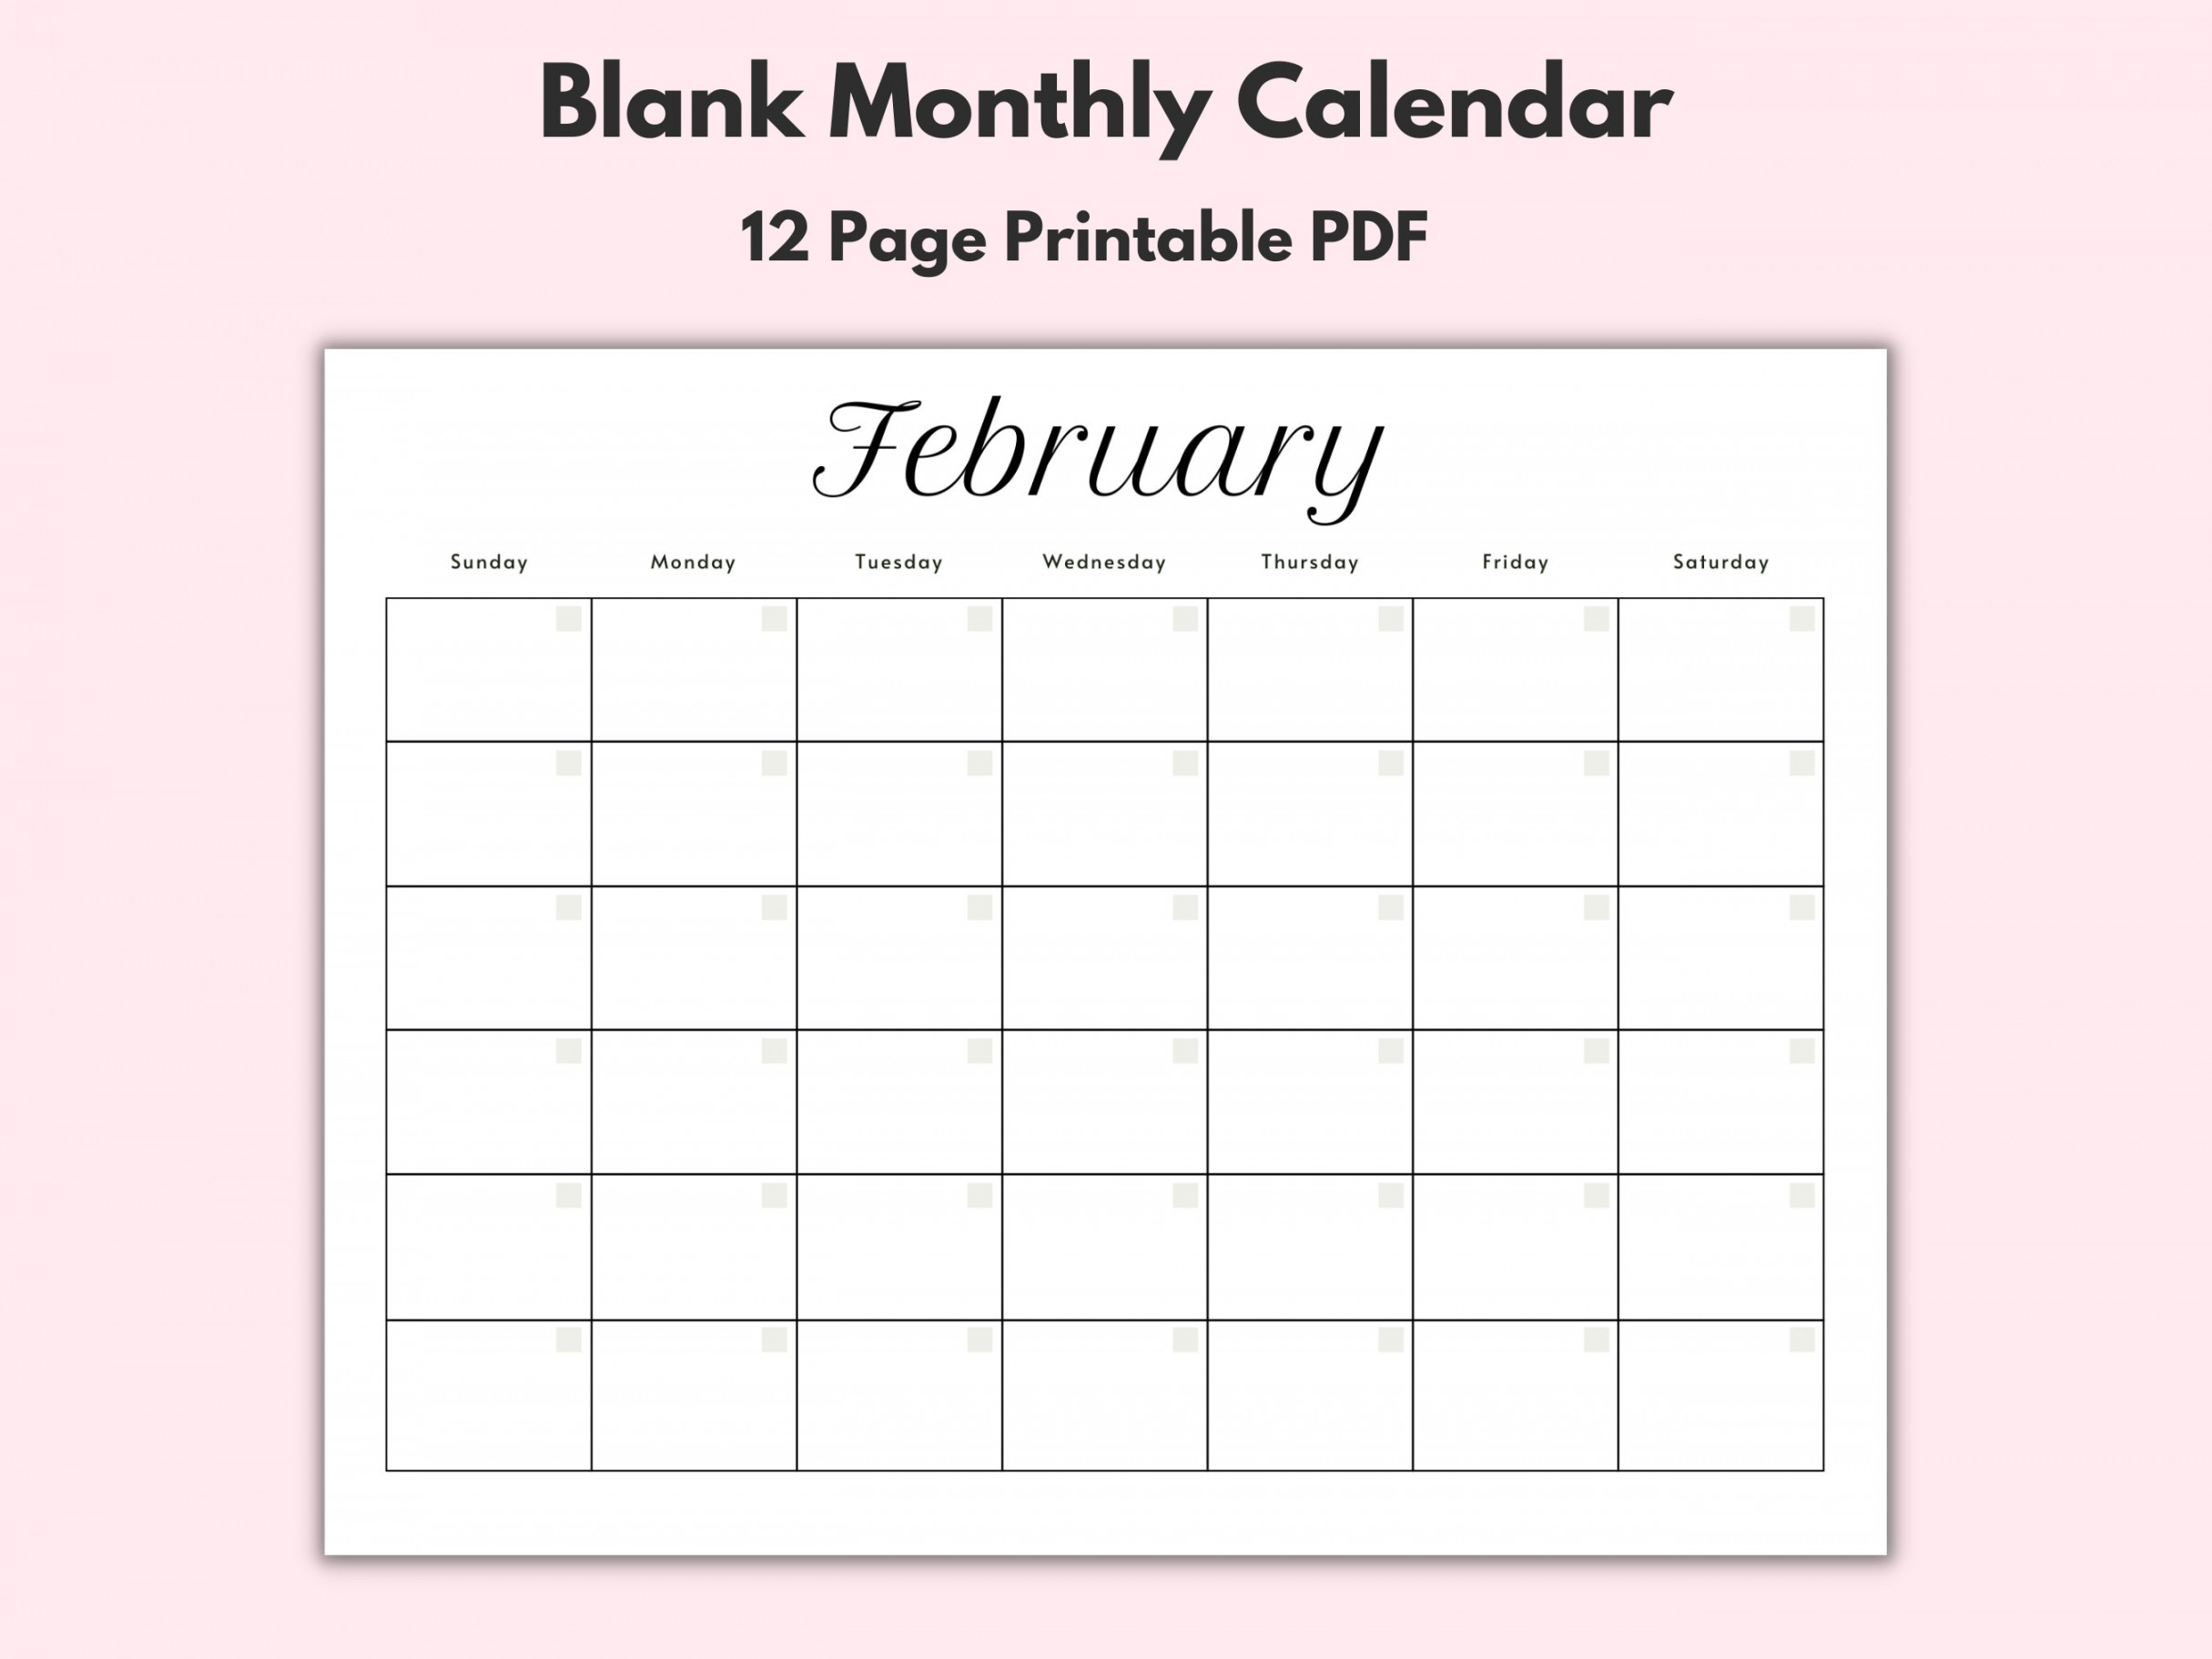 Monthly Blank Calendar Printable Calendar Template - Etsy Israel